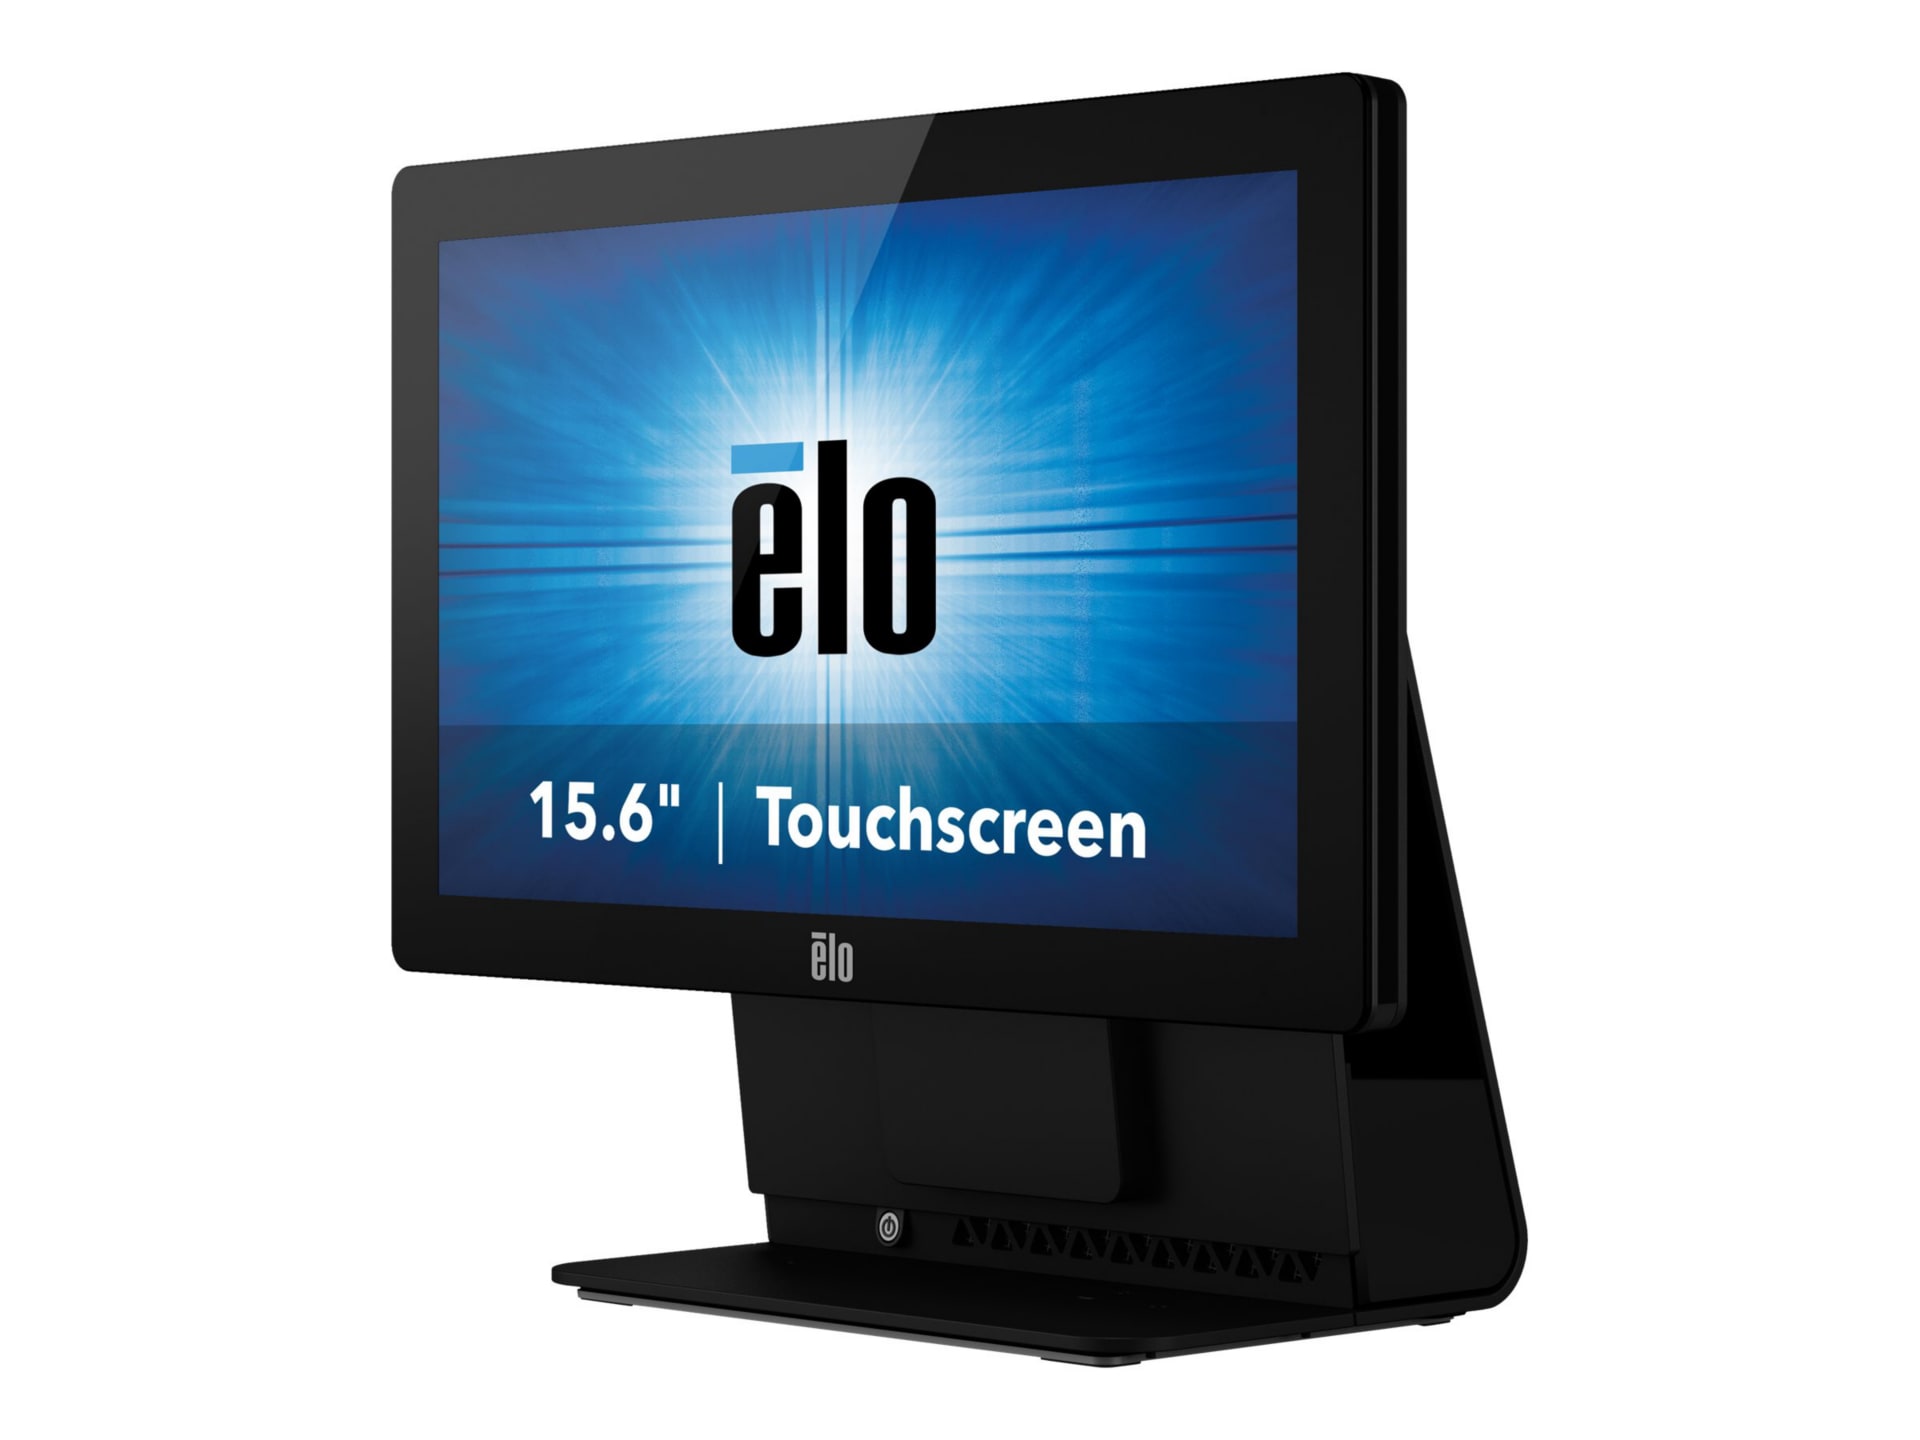 Elo Touchcomputer 15E2 - kiosk - Celeron J1900 2 GHz - 4 GB - SSD 128 GB -